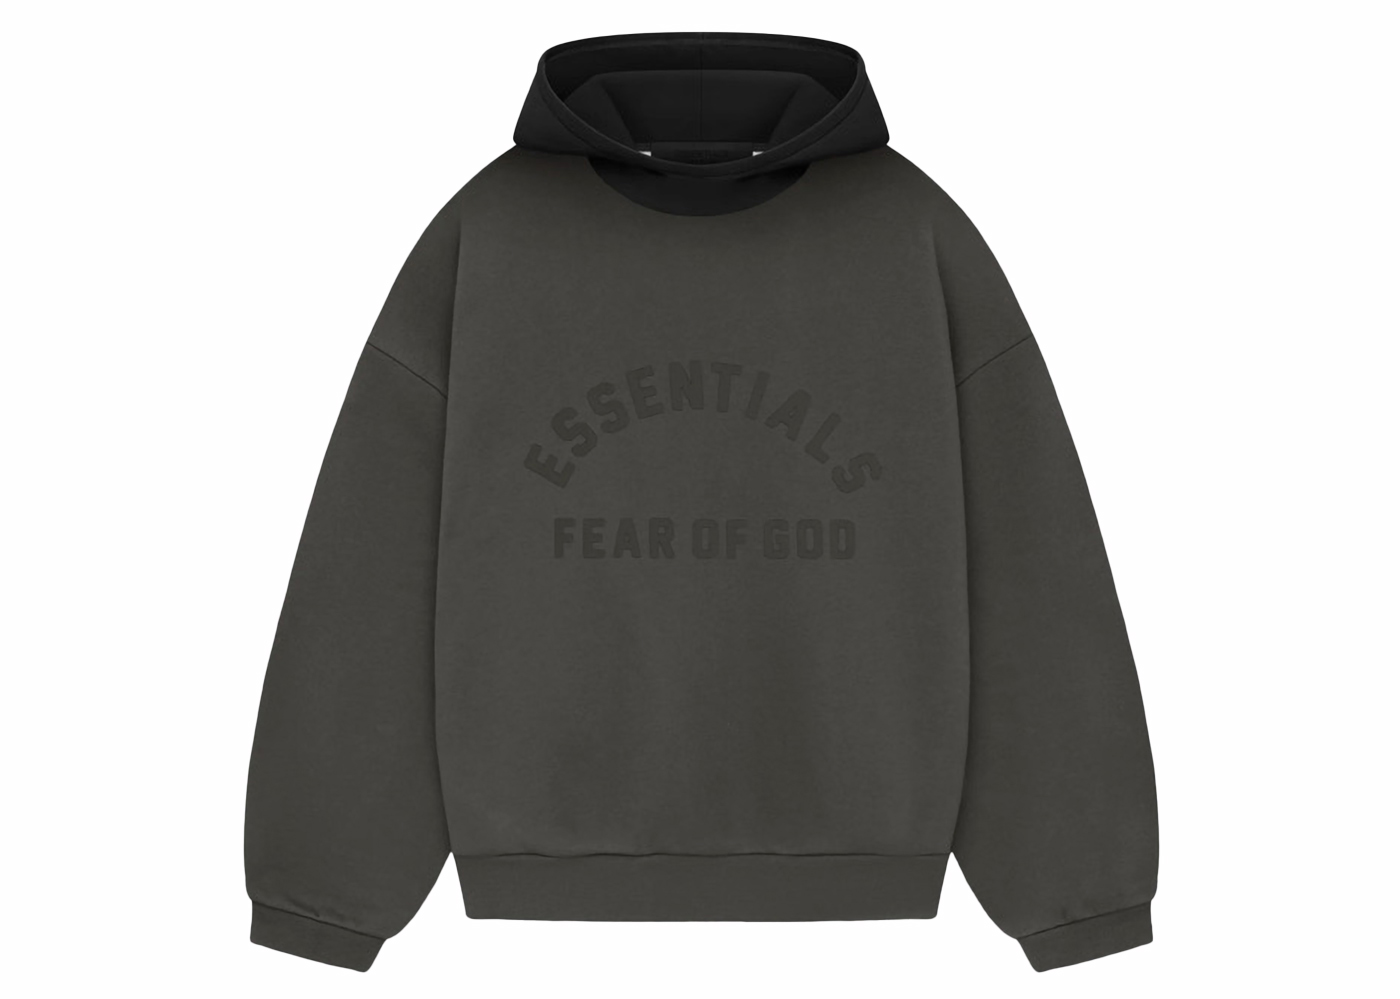 Buy Fear of God Essentials Hoodies and Streetwear - StockX